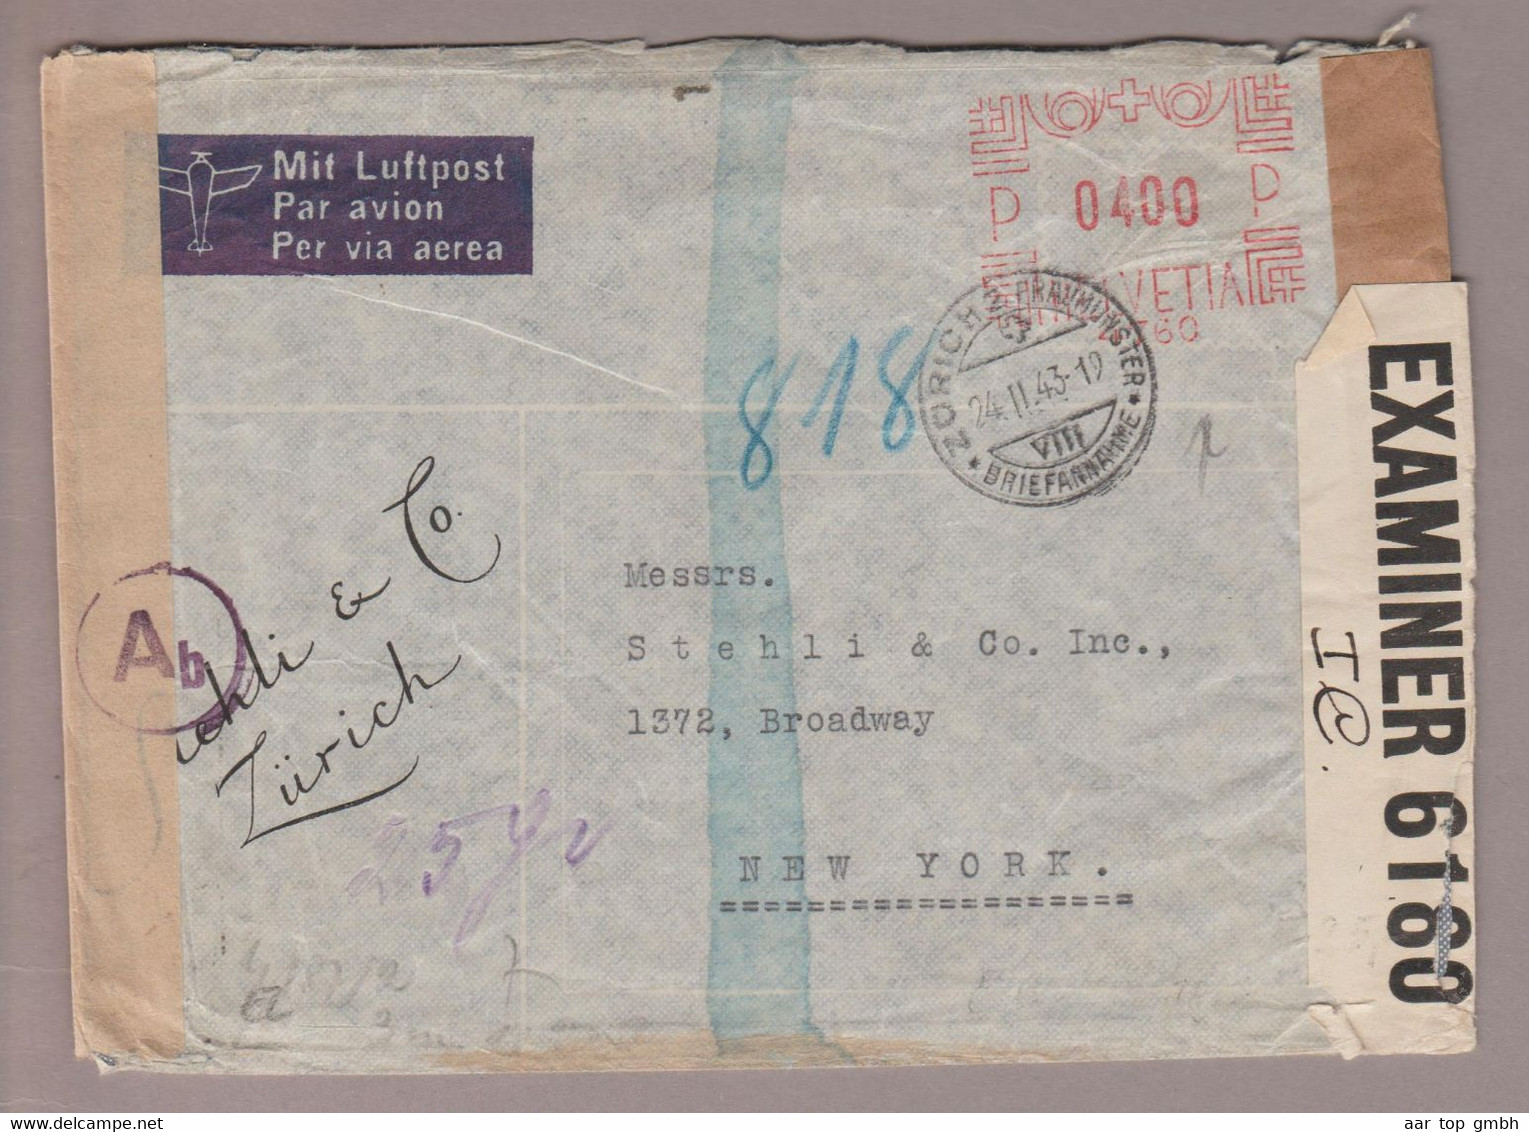 CH Firmenfreistempel 1943-02-24 Zürich2 Brief Nach New York 400 Rp. Mit Geheimschriftsprüfung - Frankiermaschinen (FraMA)